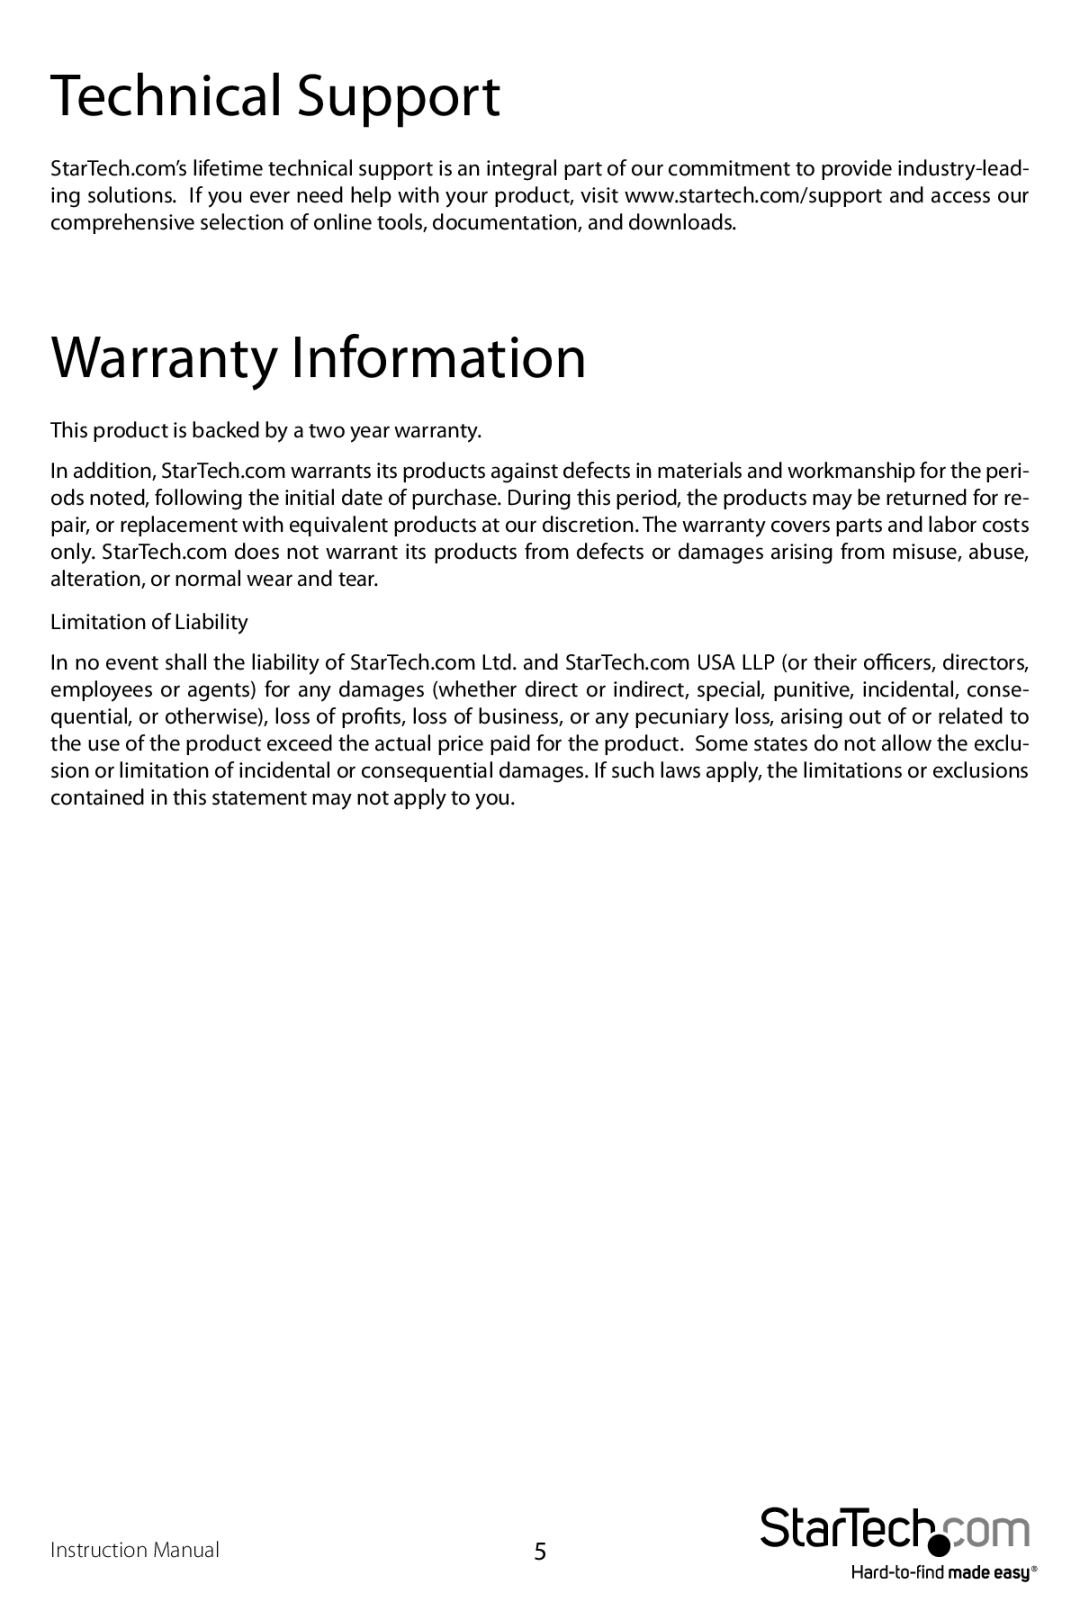 StarTech.com pciusb7 manual Technical Support, Warranty Information 